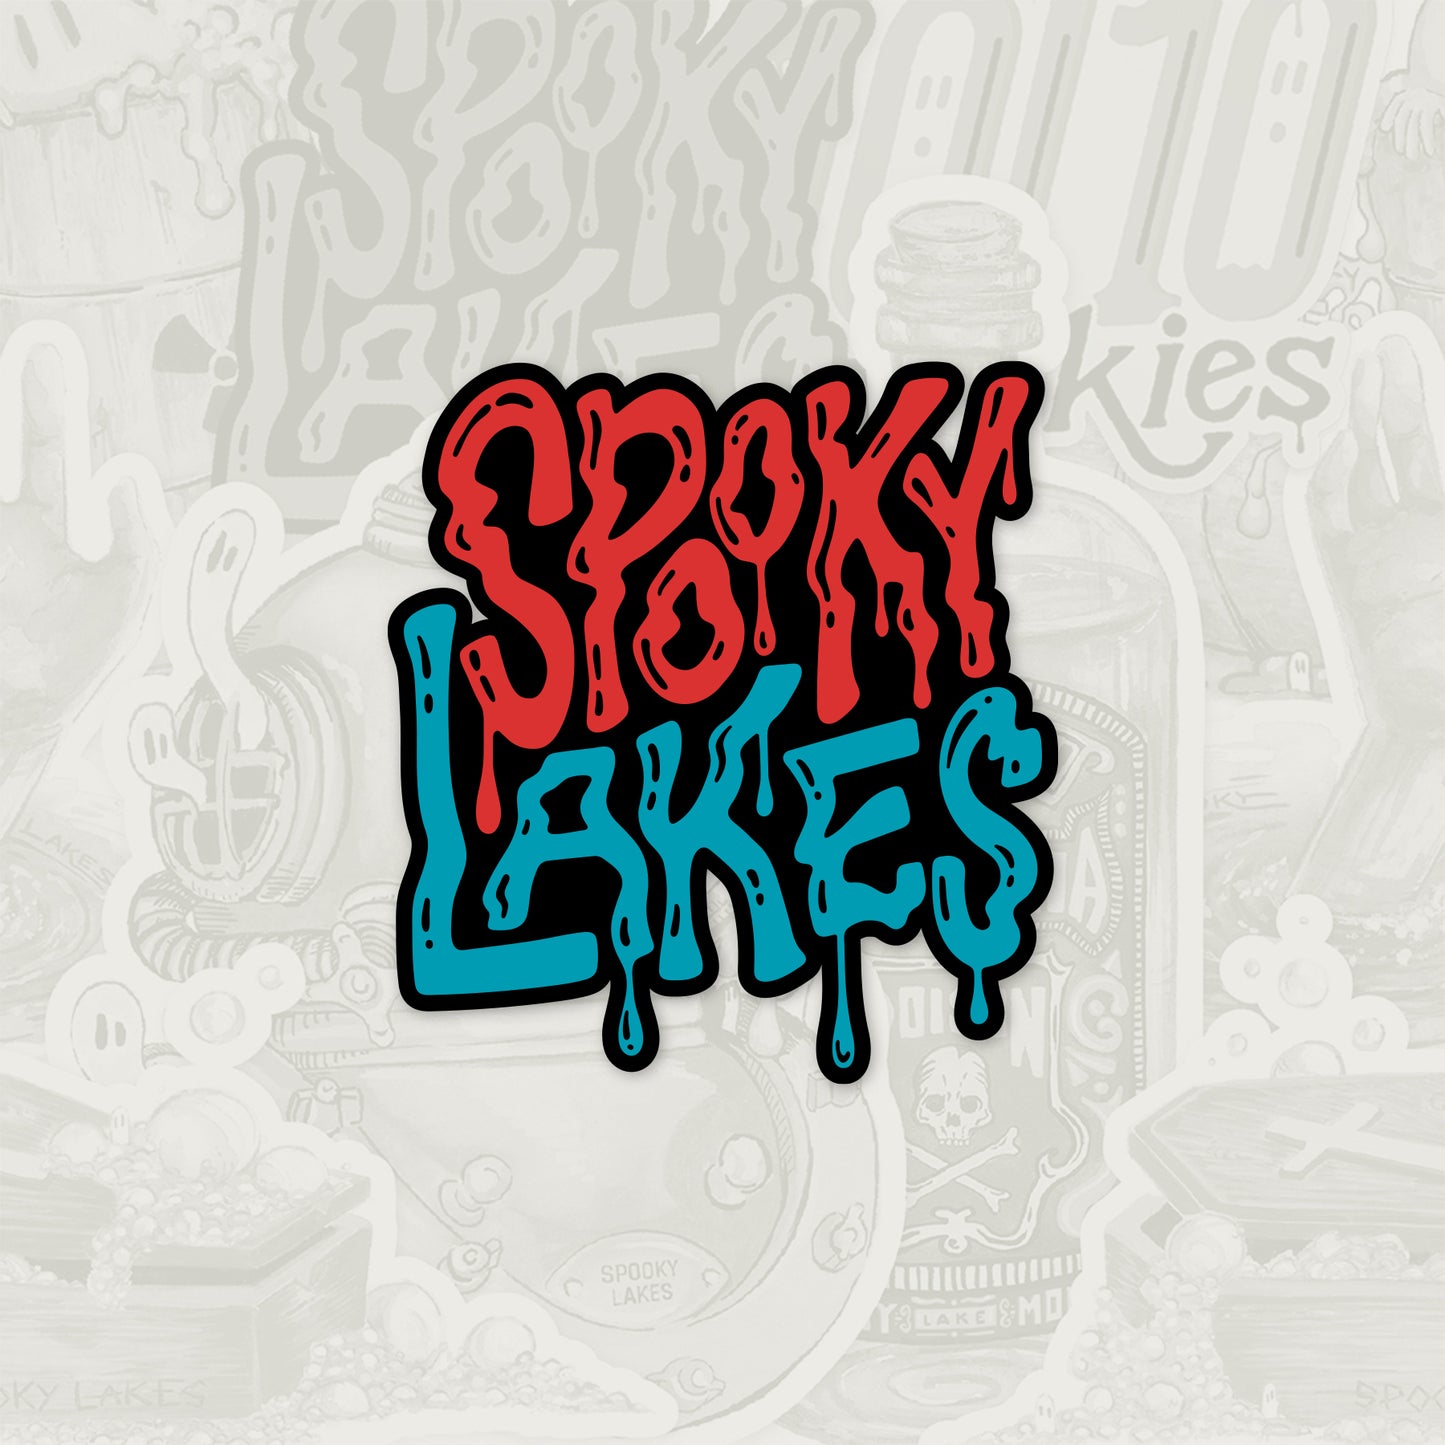 Spooky Lakes Sticker: 2023 Spooky Lake Month